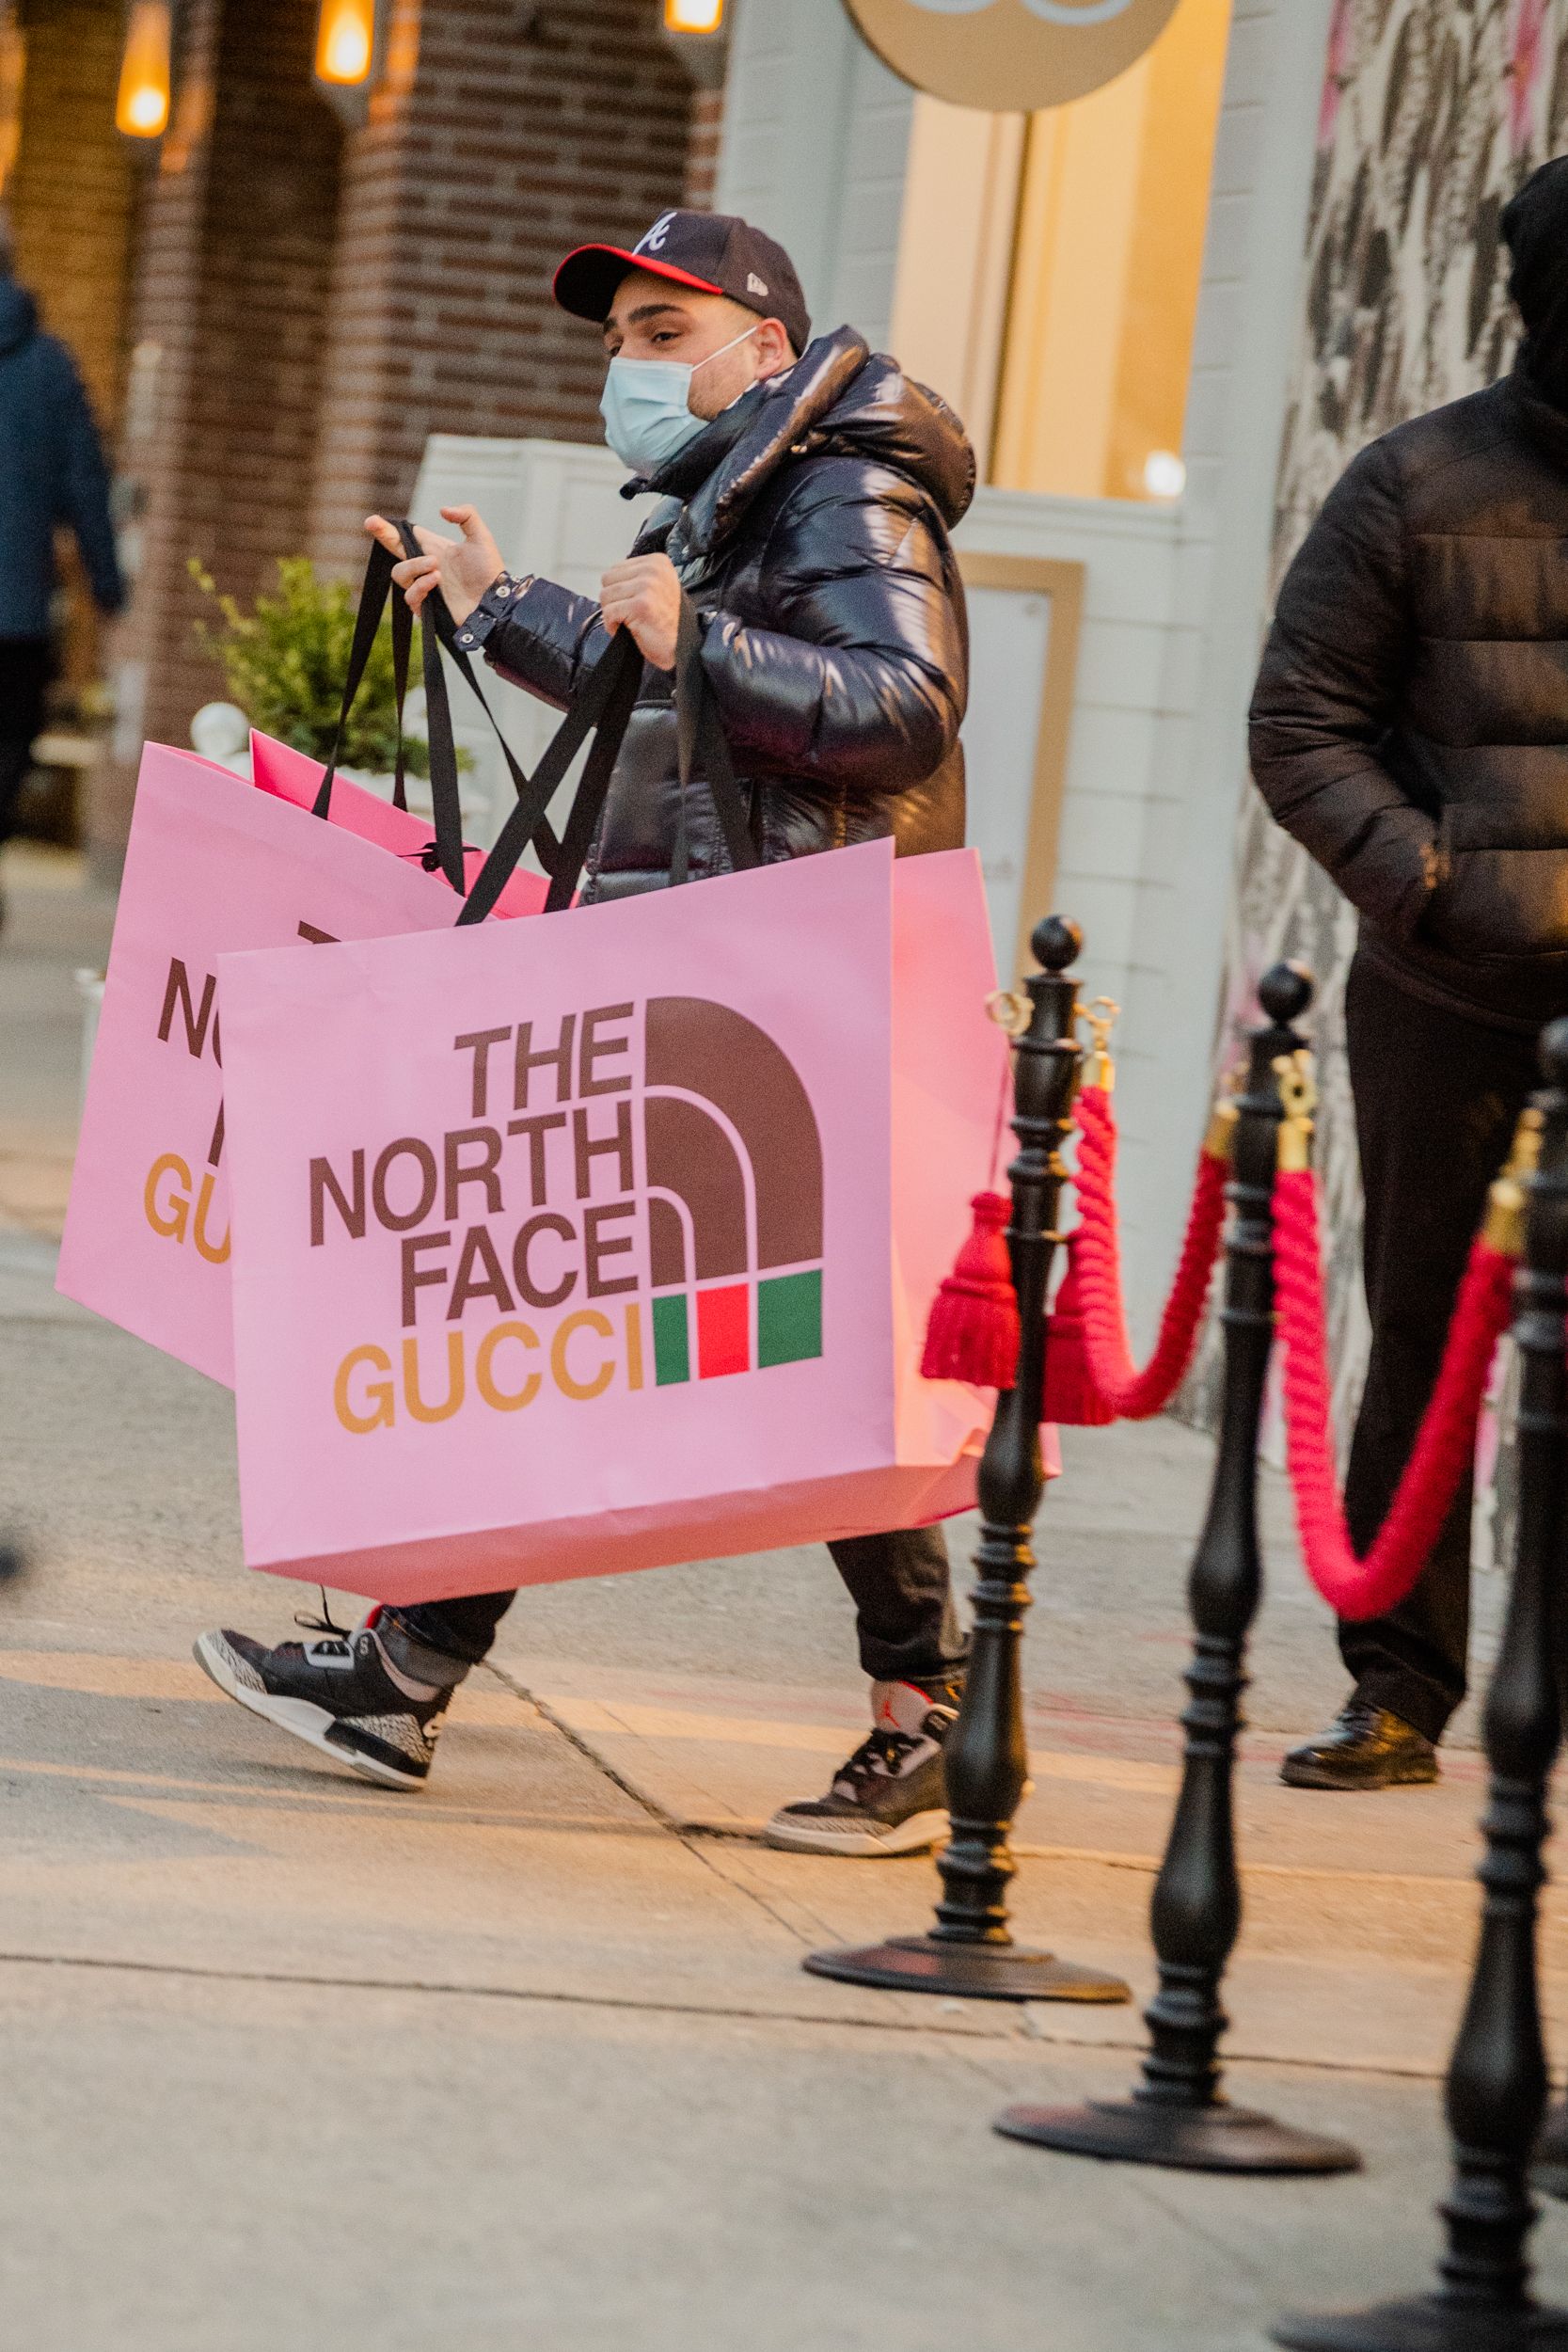 The North Face Gucci 